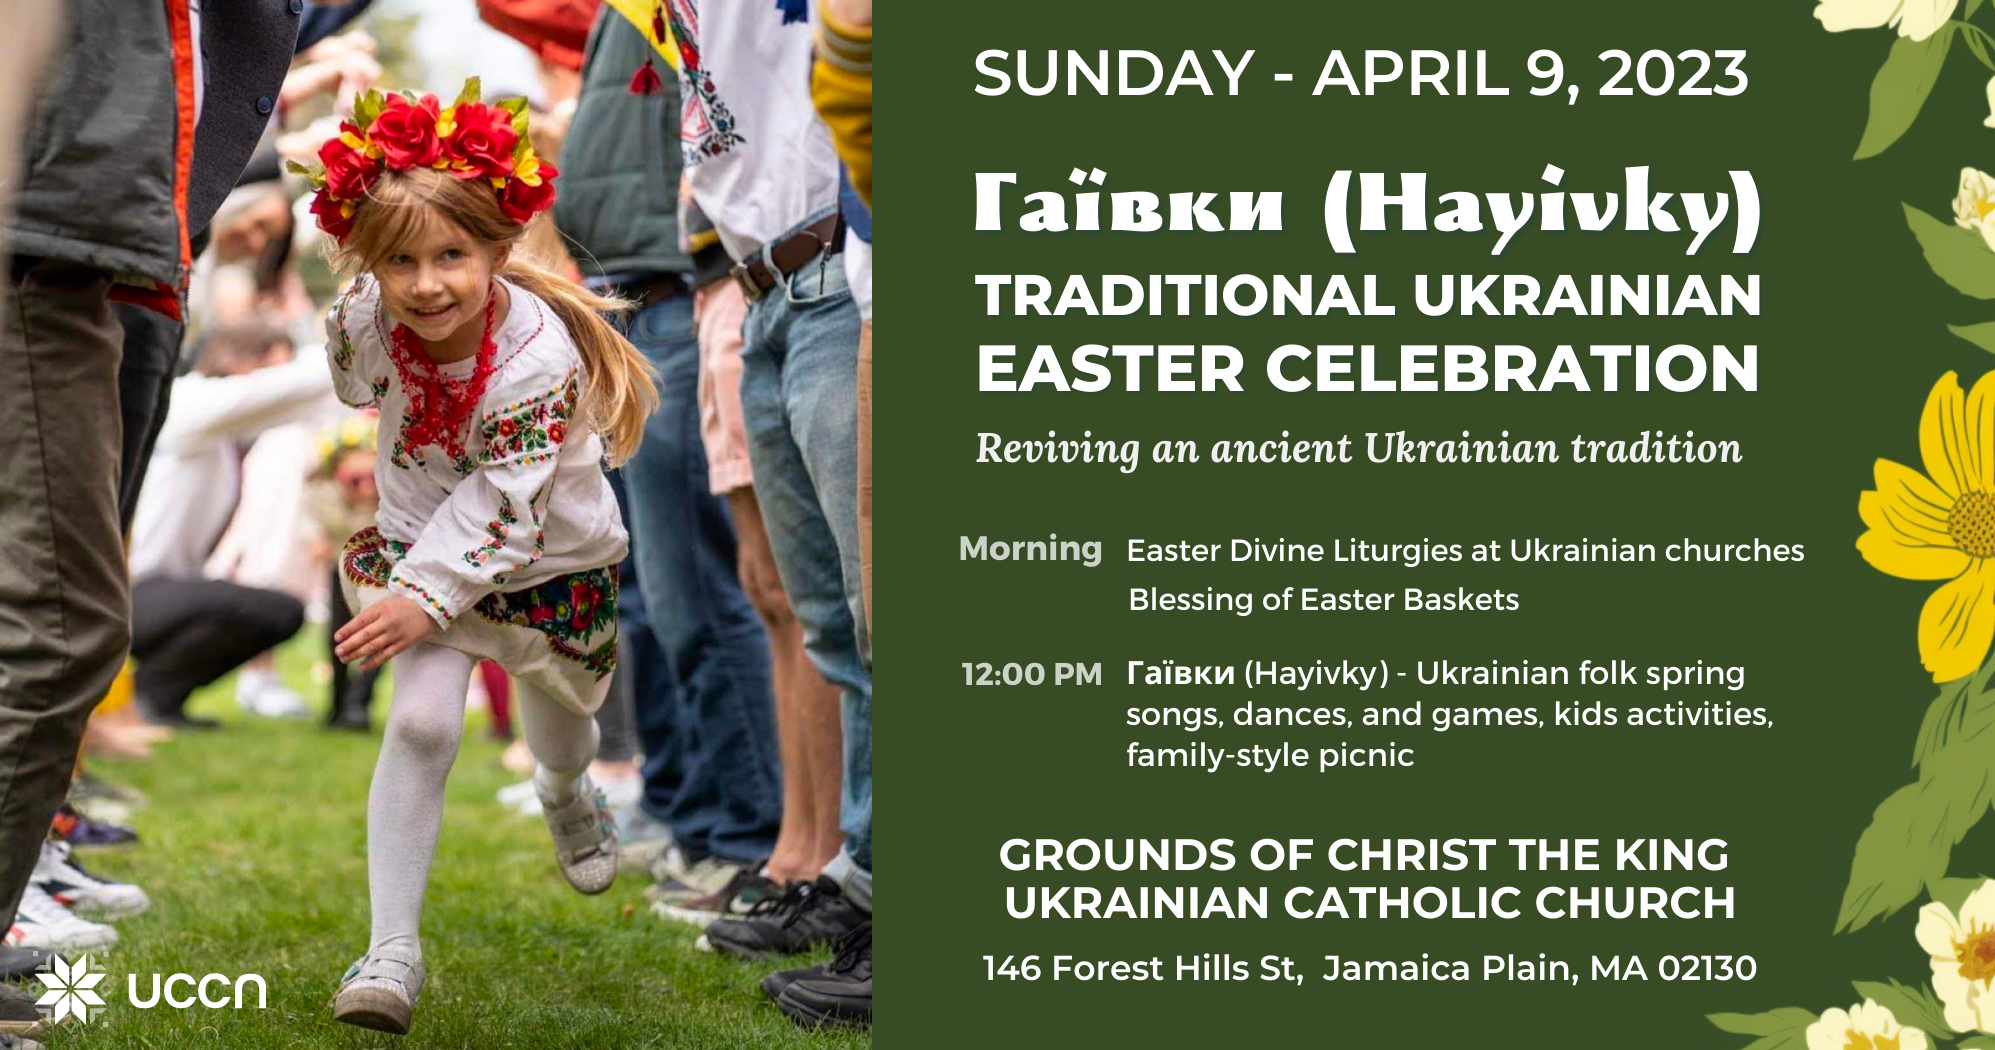 Гаївки (Hayivky) - Traditional Ukrainian Easter Celebration